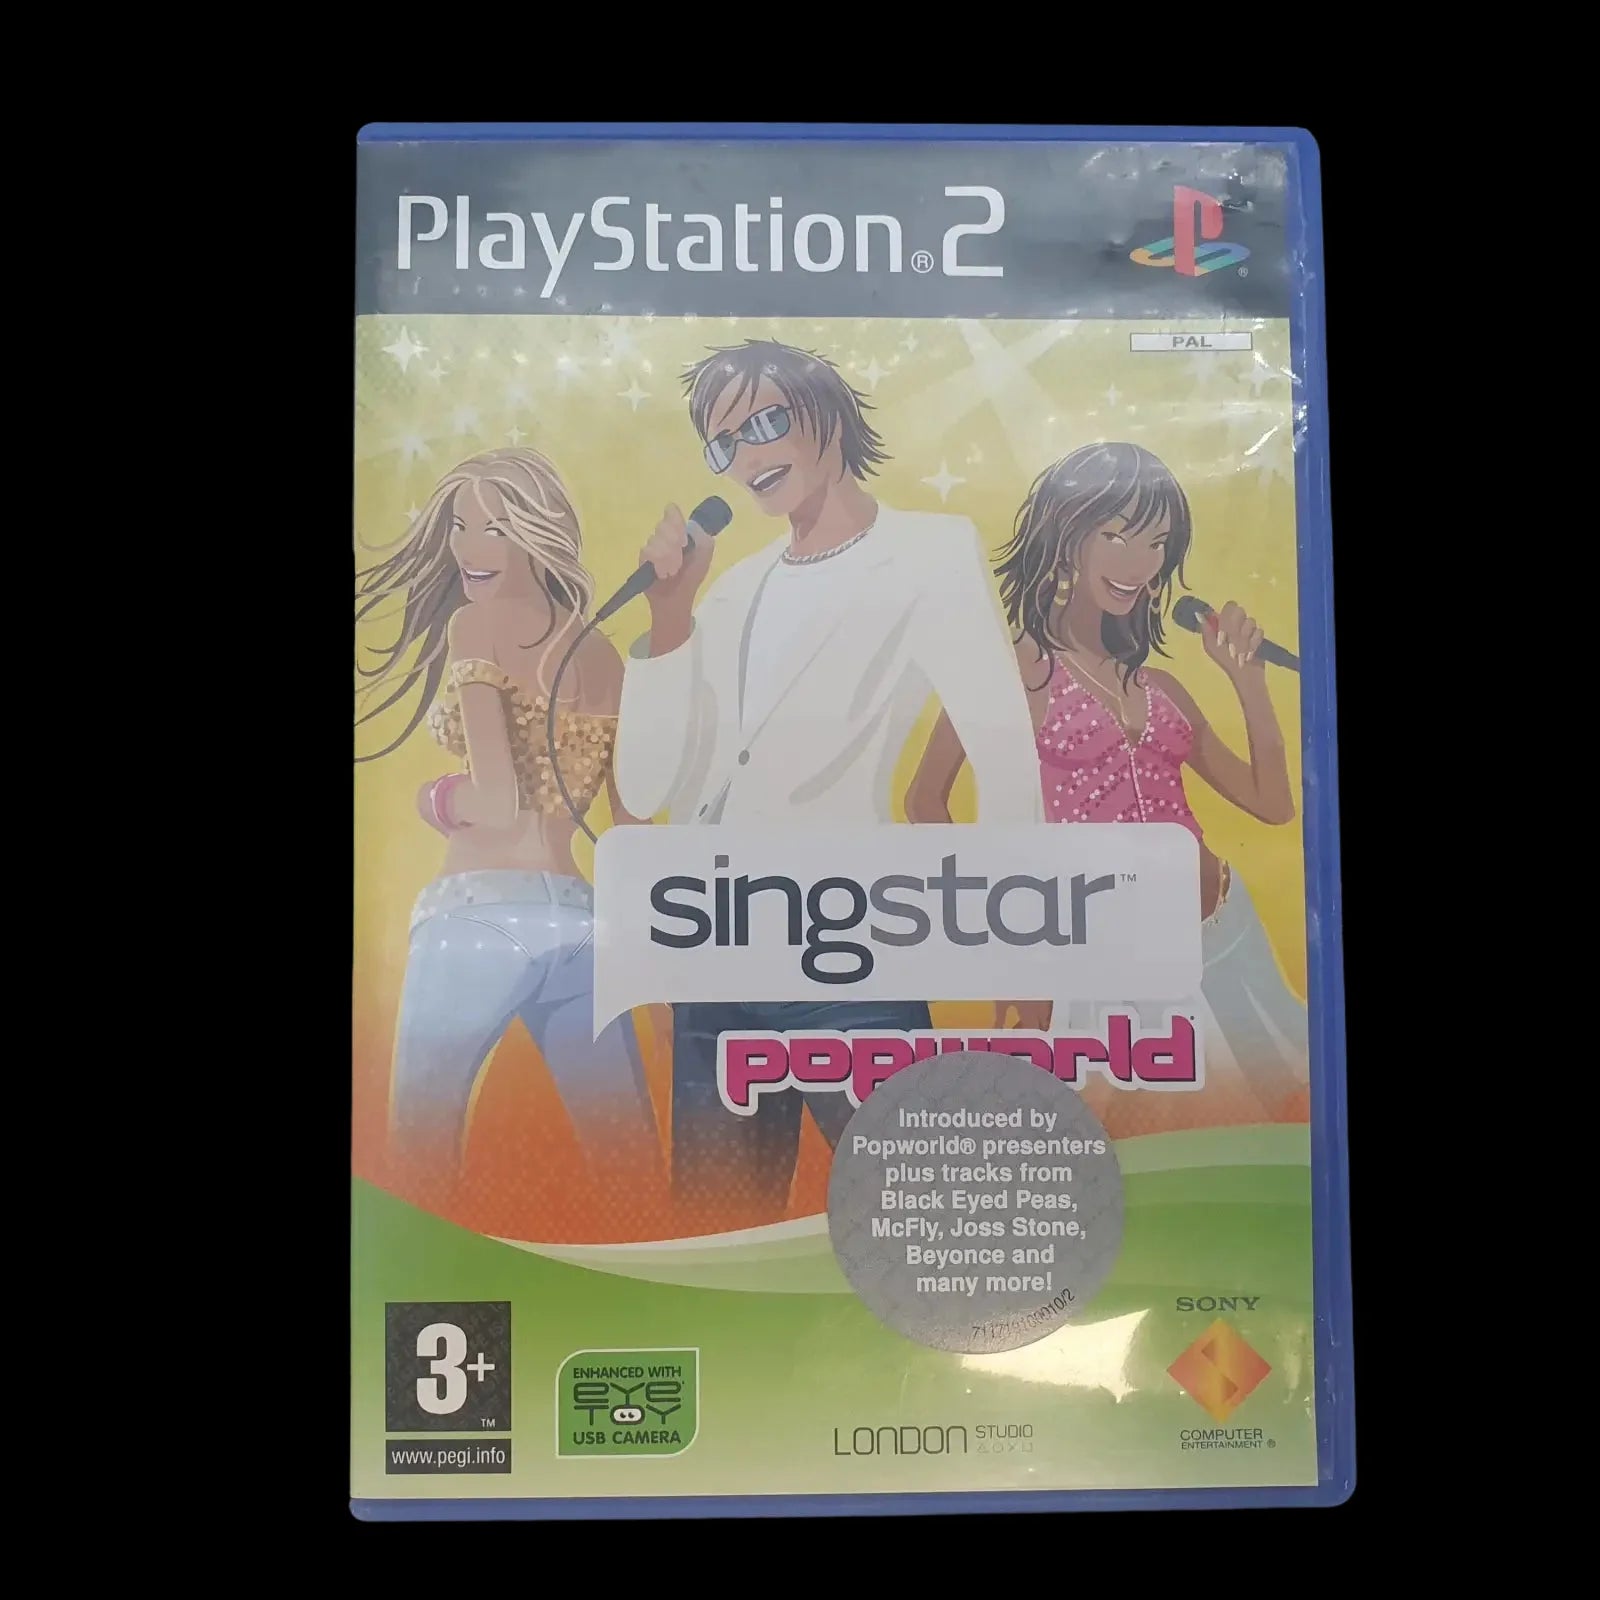 Singstar Popworld Sony Playstation 2 Ps2 2005 Video Game